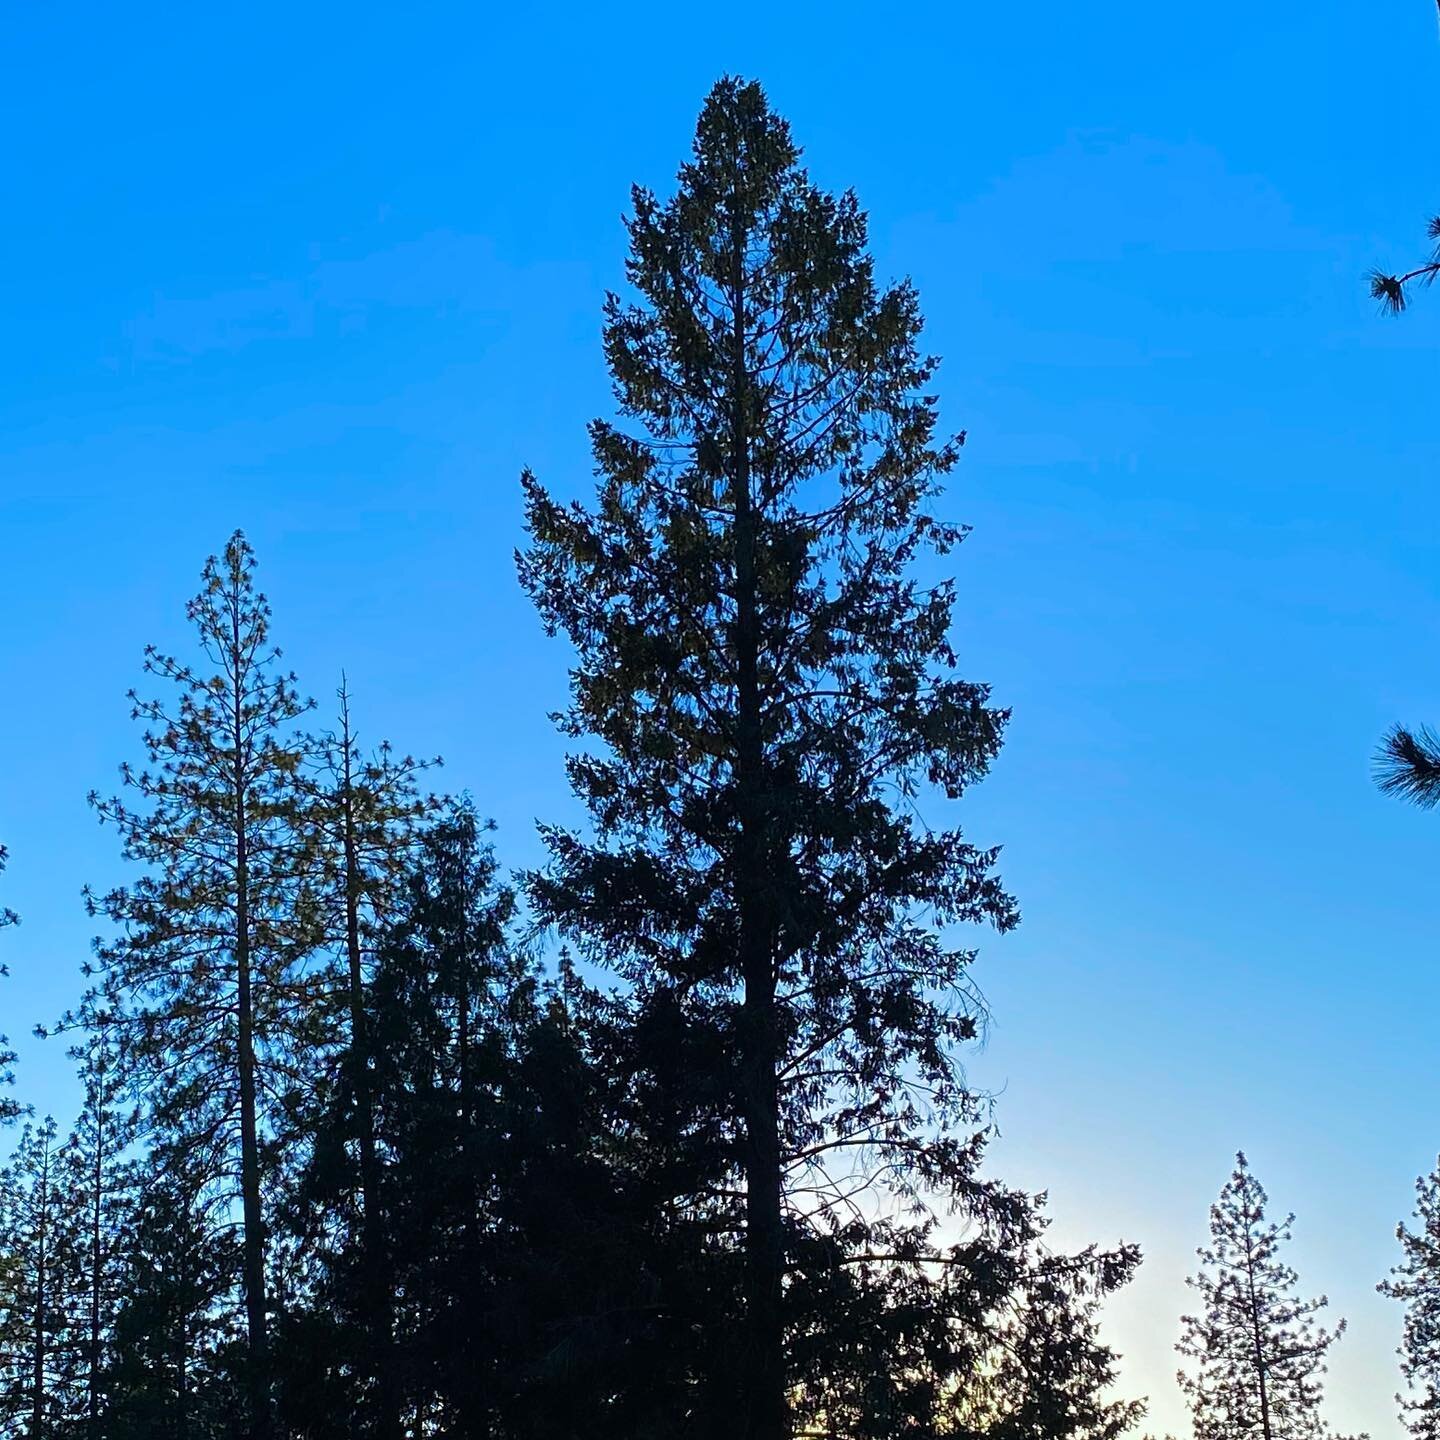 A late evening hike always clears the mind. 

#adventure #getoutside #pinemountain #outdoors #pinemountainlake #nature #openspace #breathitin #4bearschalet #pinetrees #goldcountry #motherlode #hiking #hikecalifornia #traveltuolumnecounty #cabinlife #